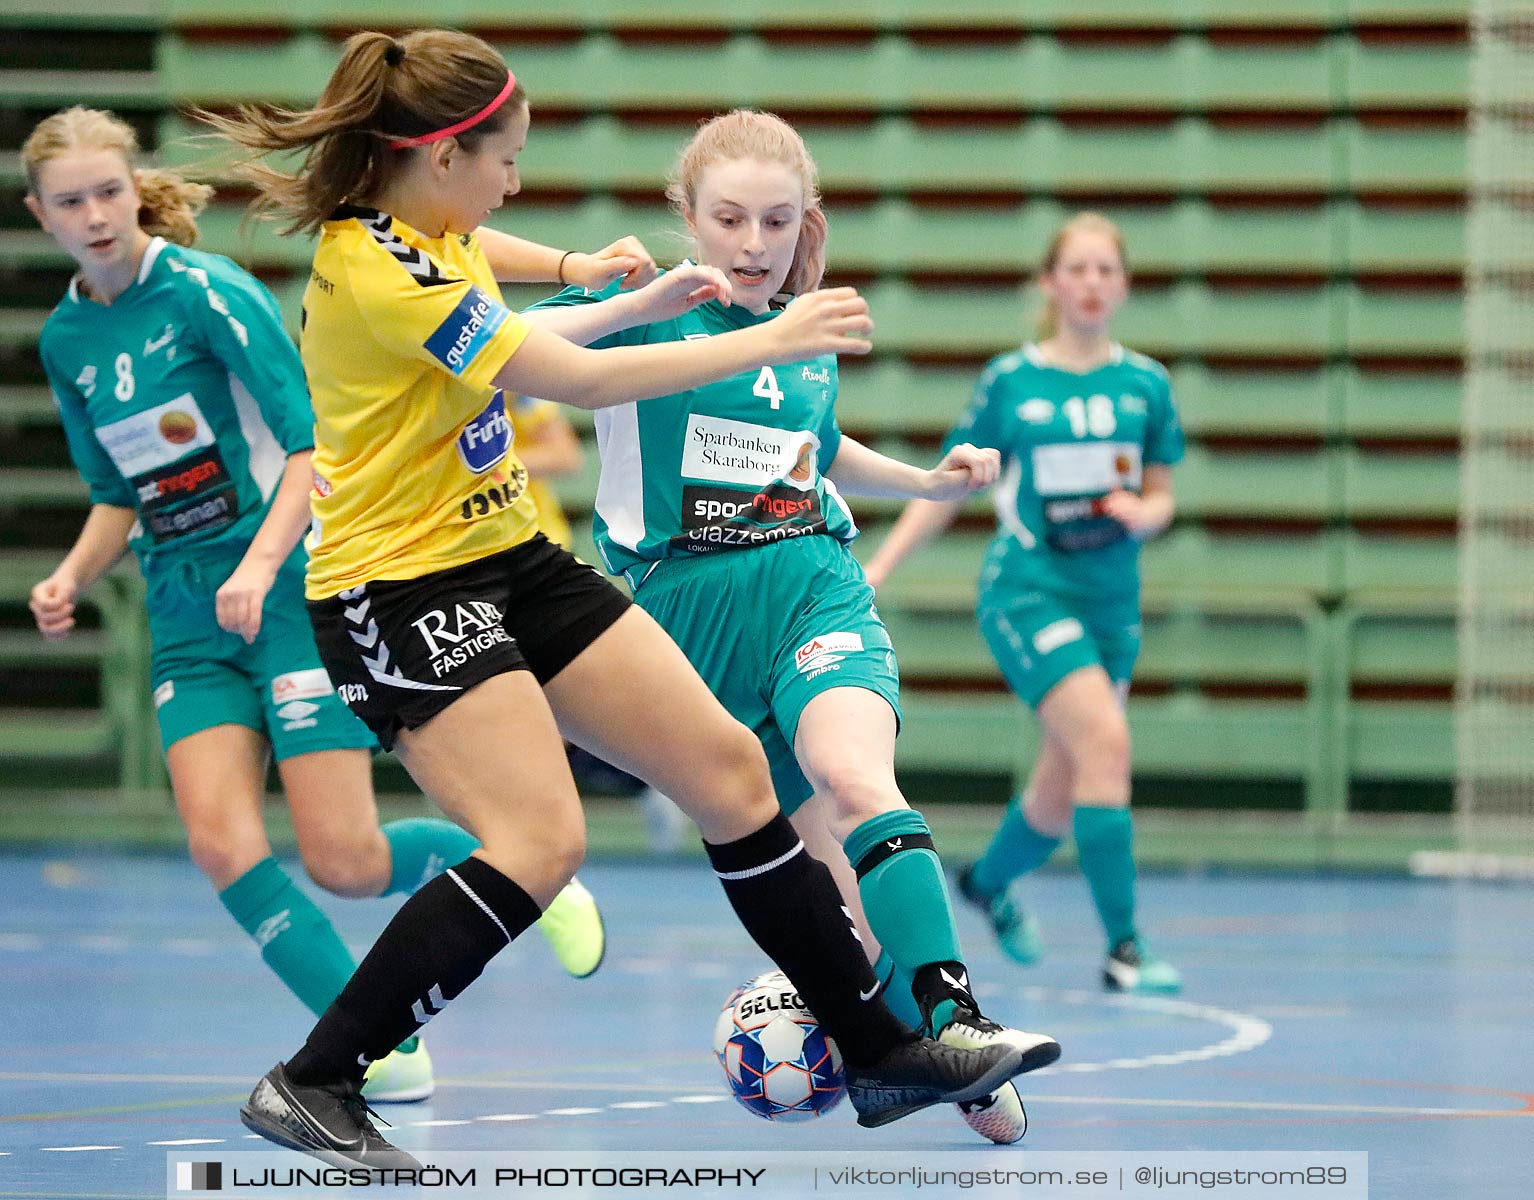 Skövde Futsalcup 2019 Damer Skultorps IF-Axvalls IF,dam,Arena Skövde,Skövde,Sverige,Futsal,,2019,227013